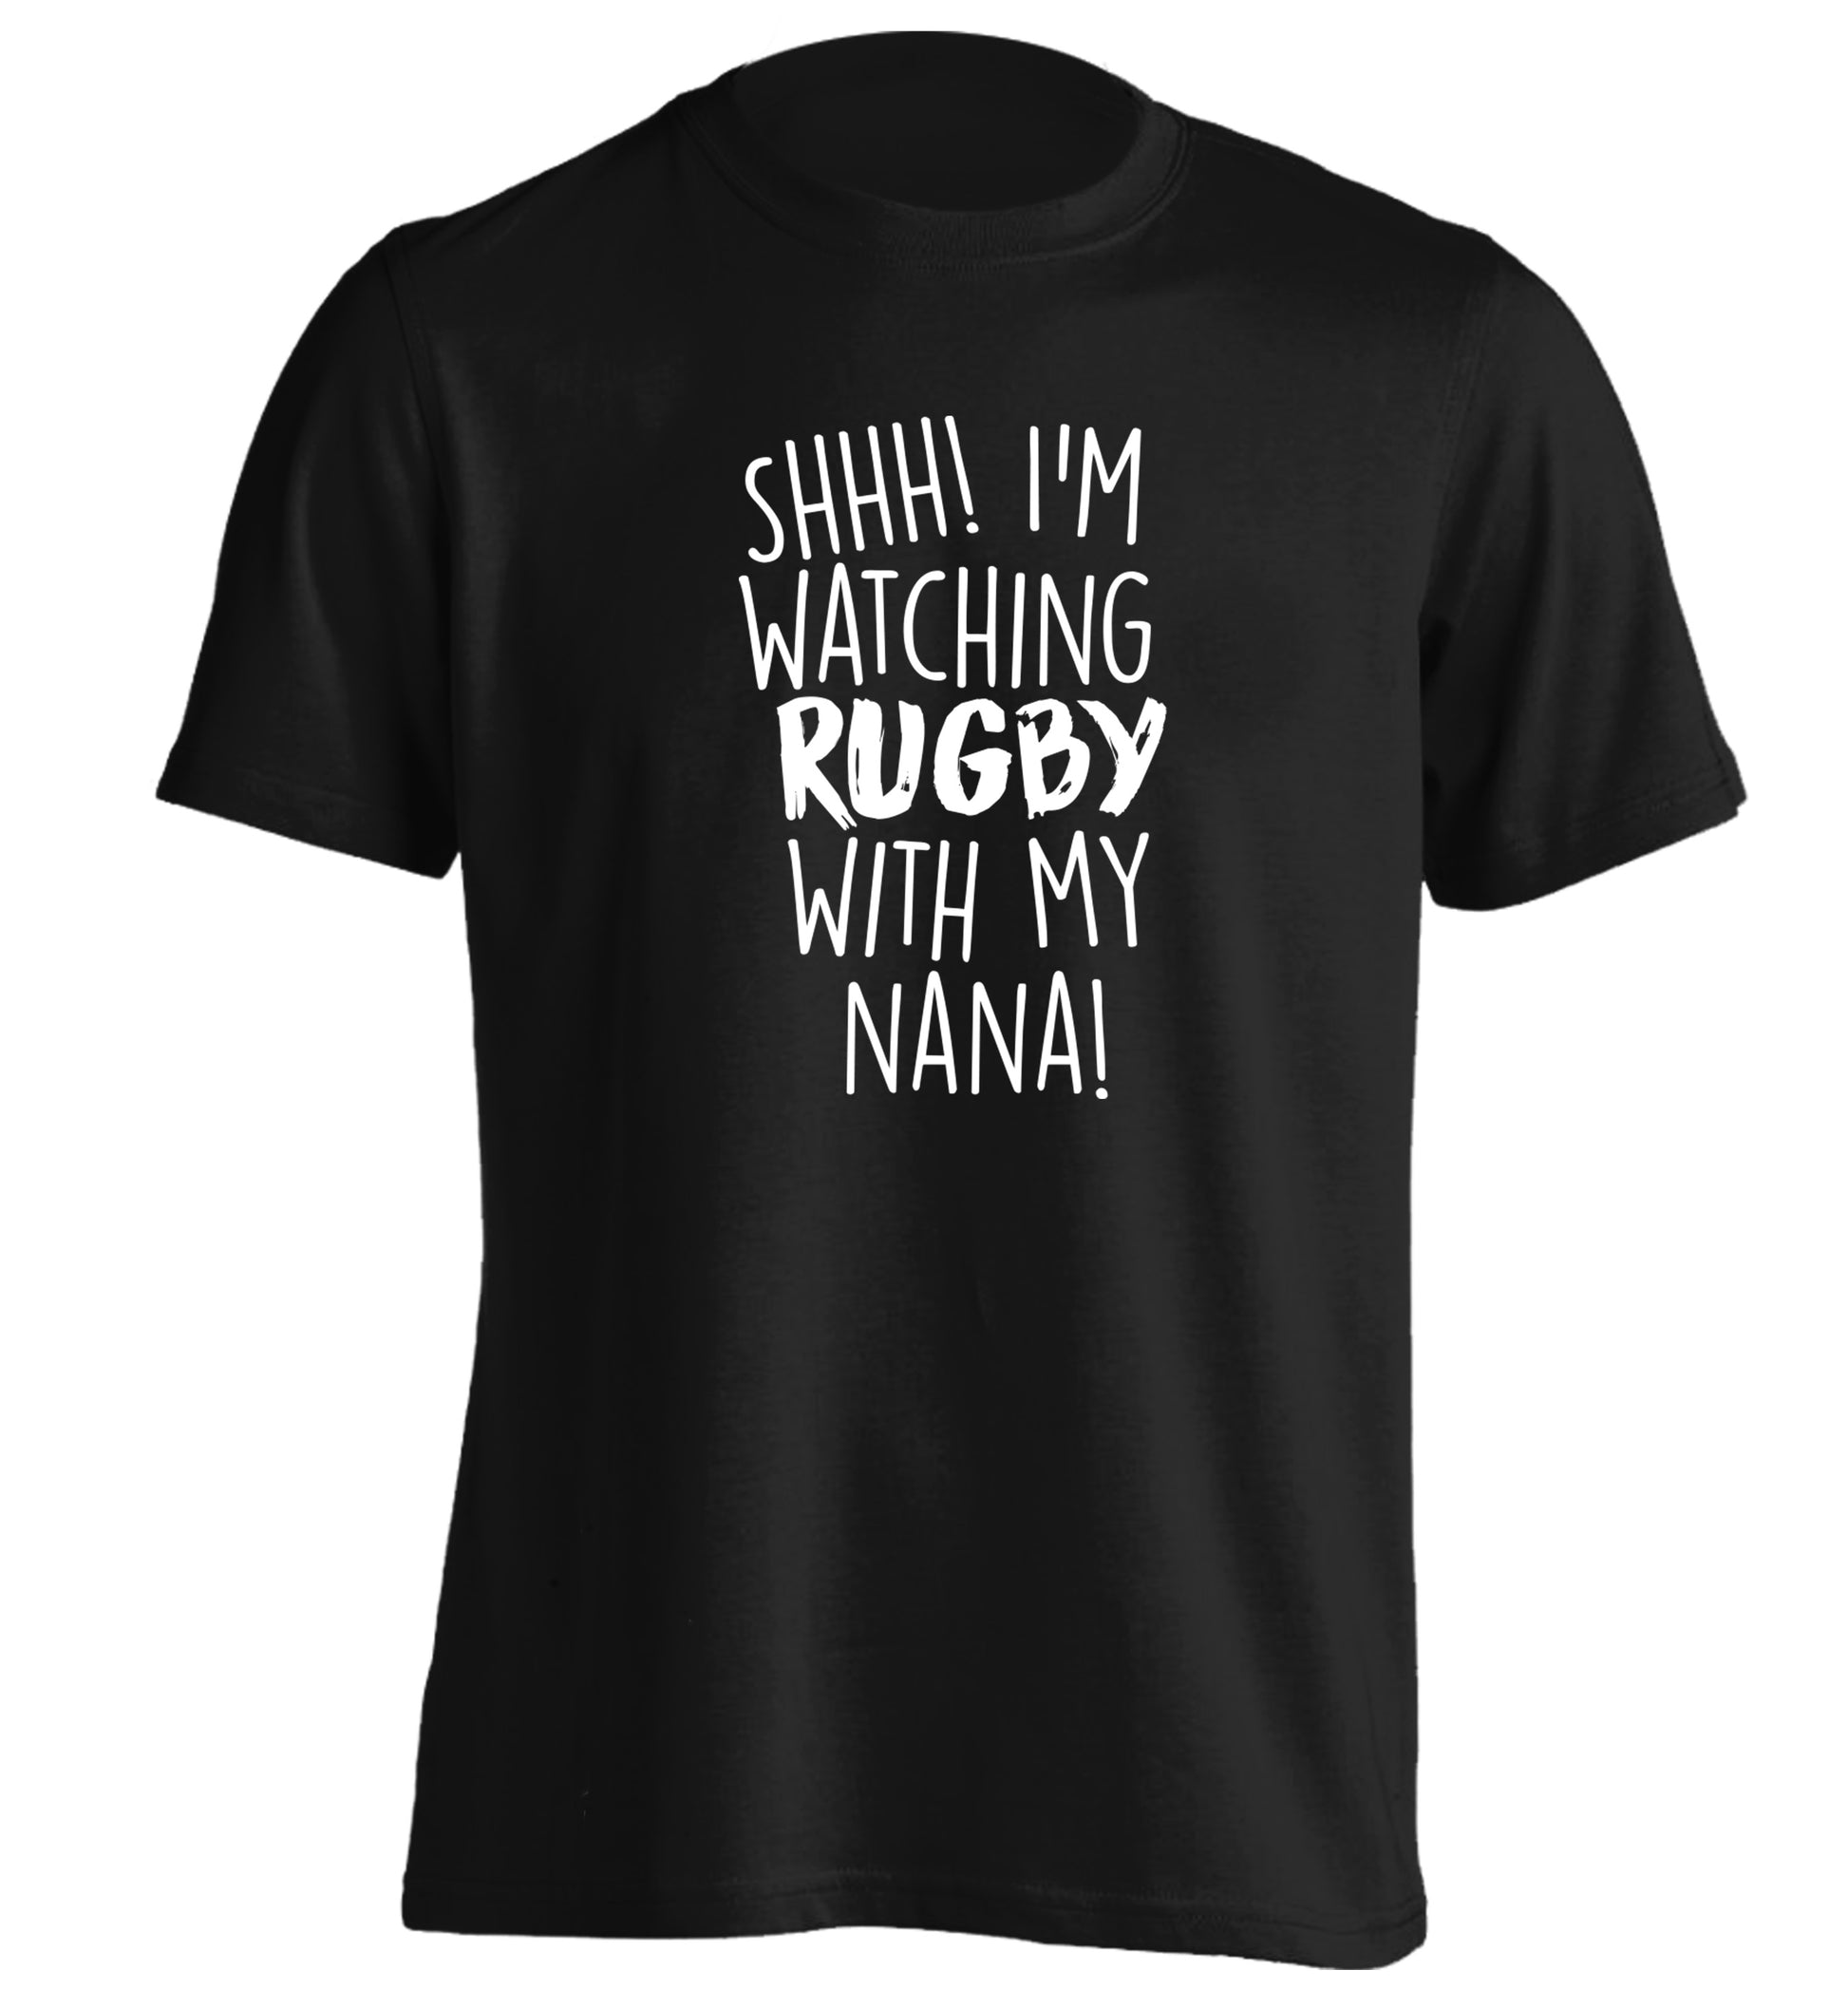 Shh I'm watching rugby with my nana adults unisex black Tshirt 2XL